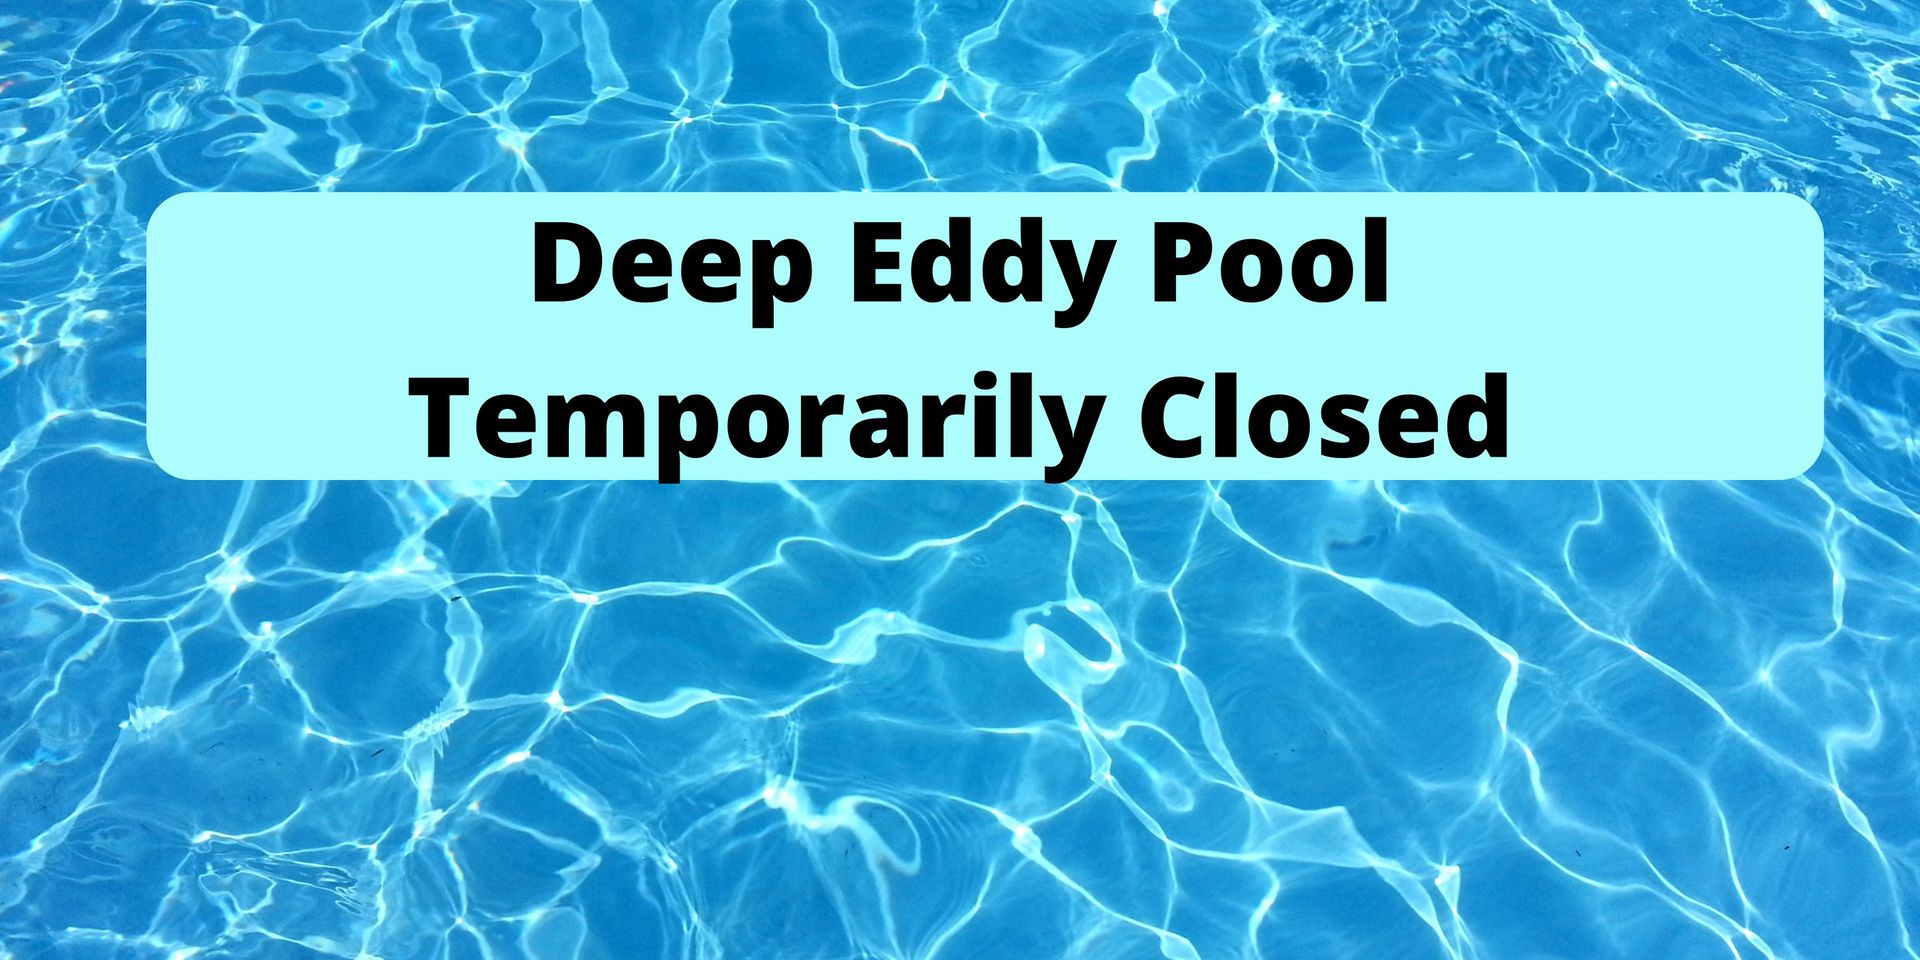 deep eddy pool temporarily closed